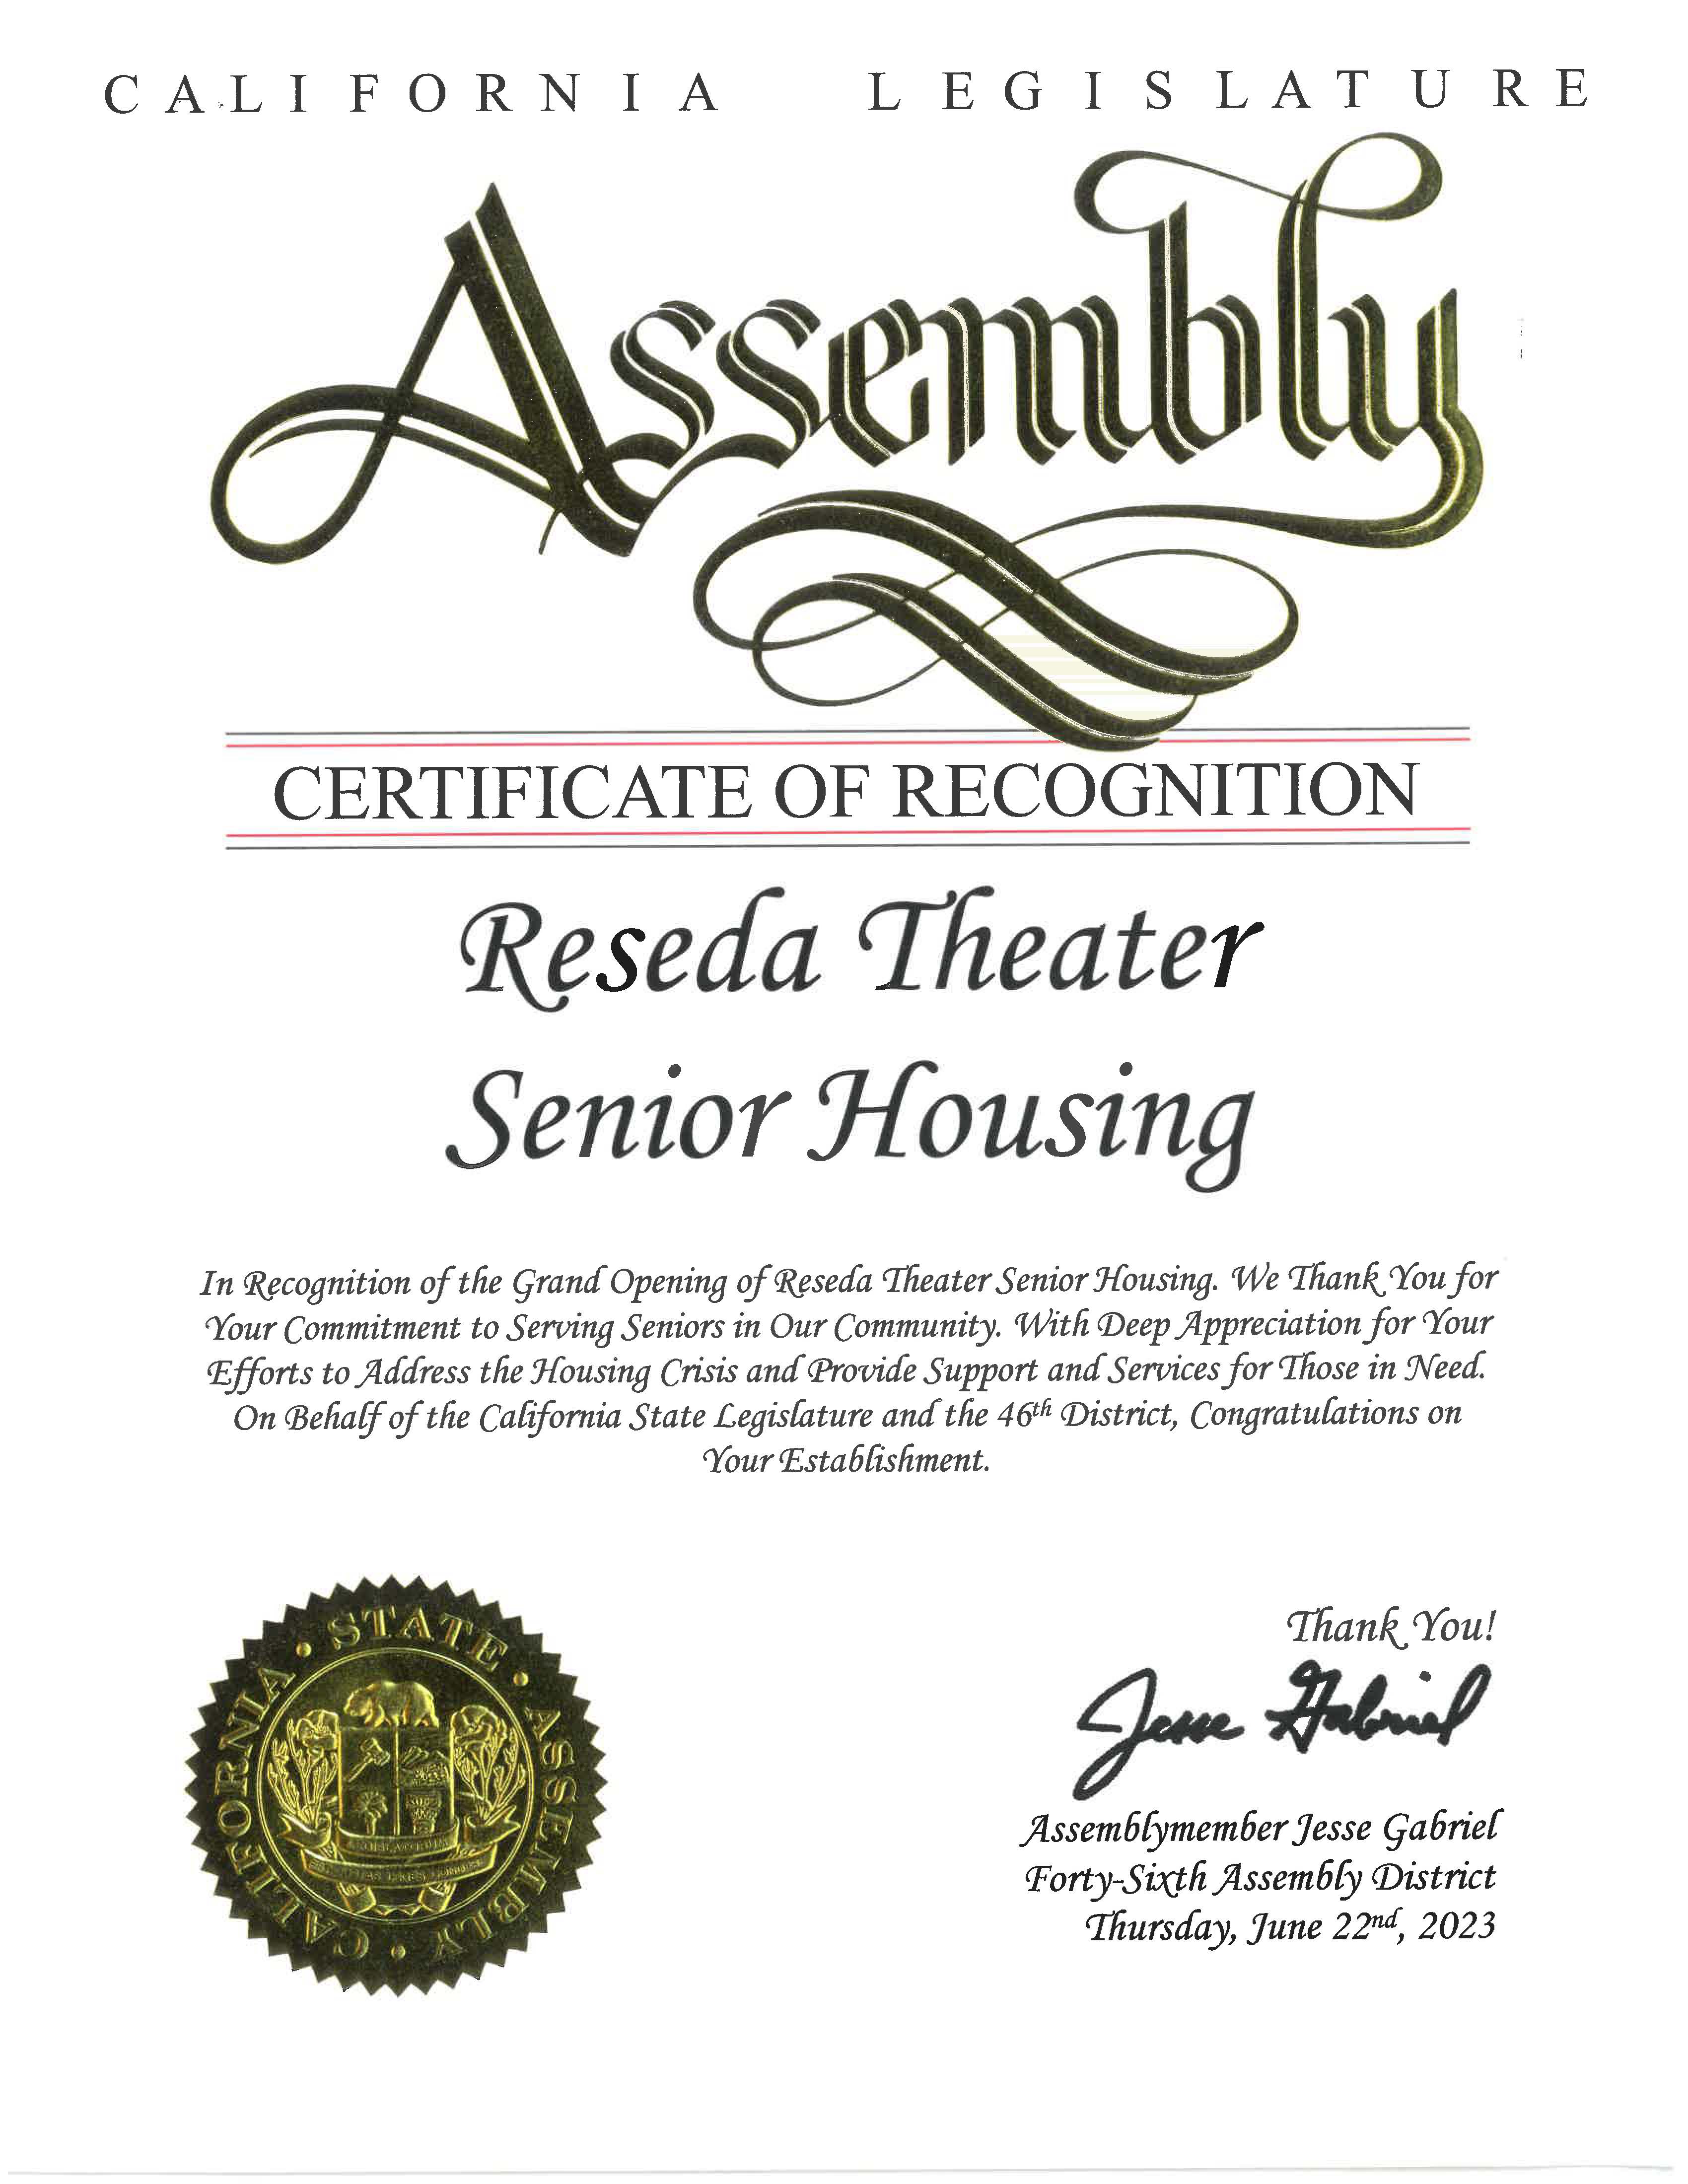 California Legislature Assembly - Certificate of Recognition 2023 - 
Reseda Theater Senior Housing